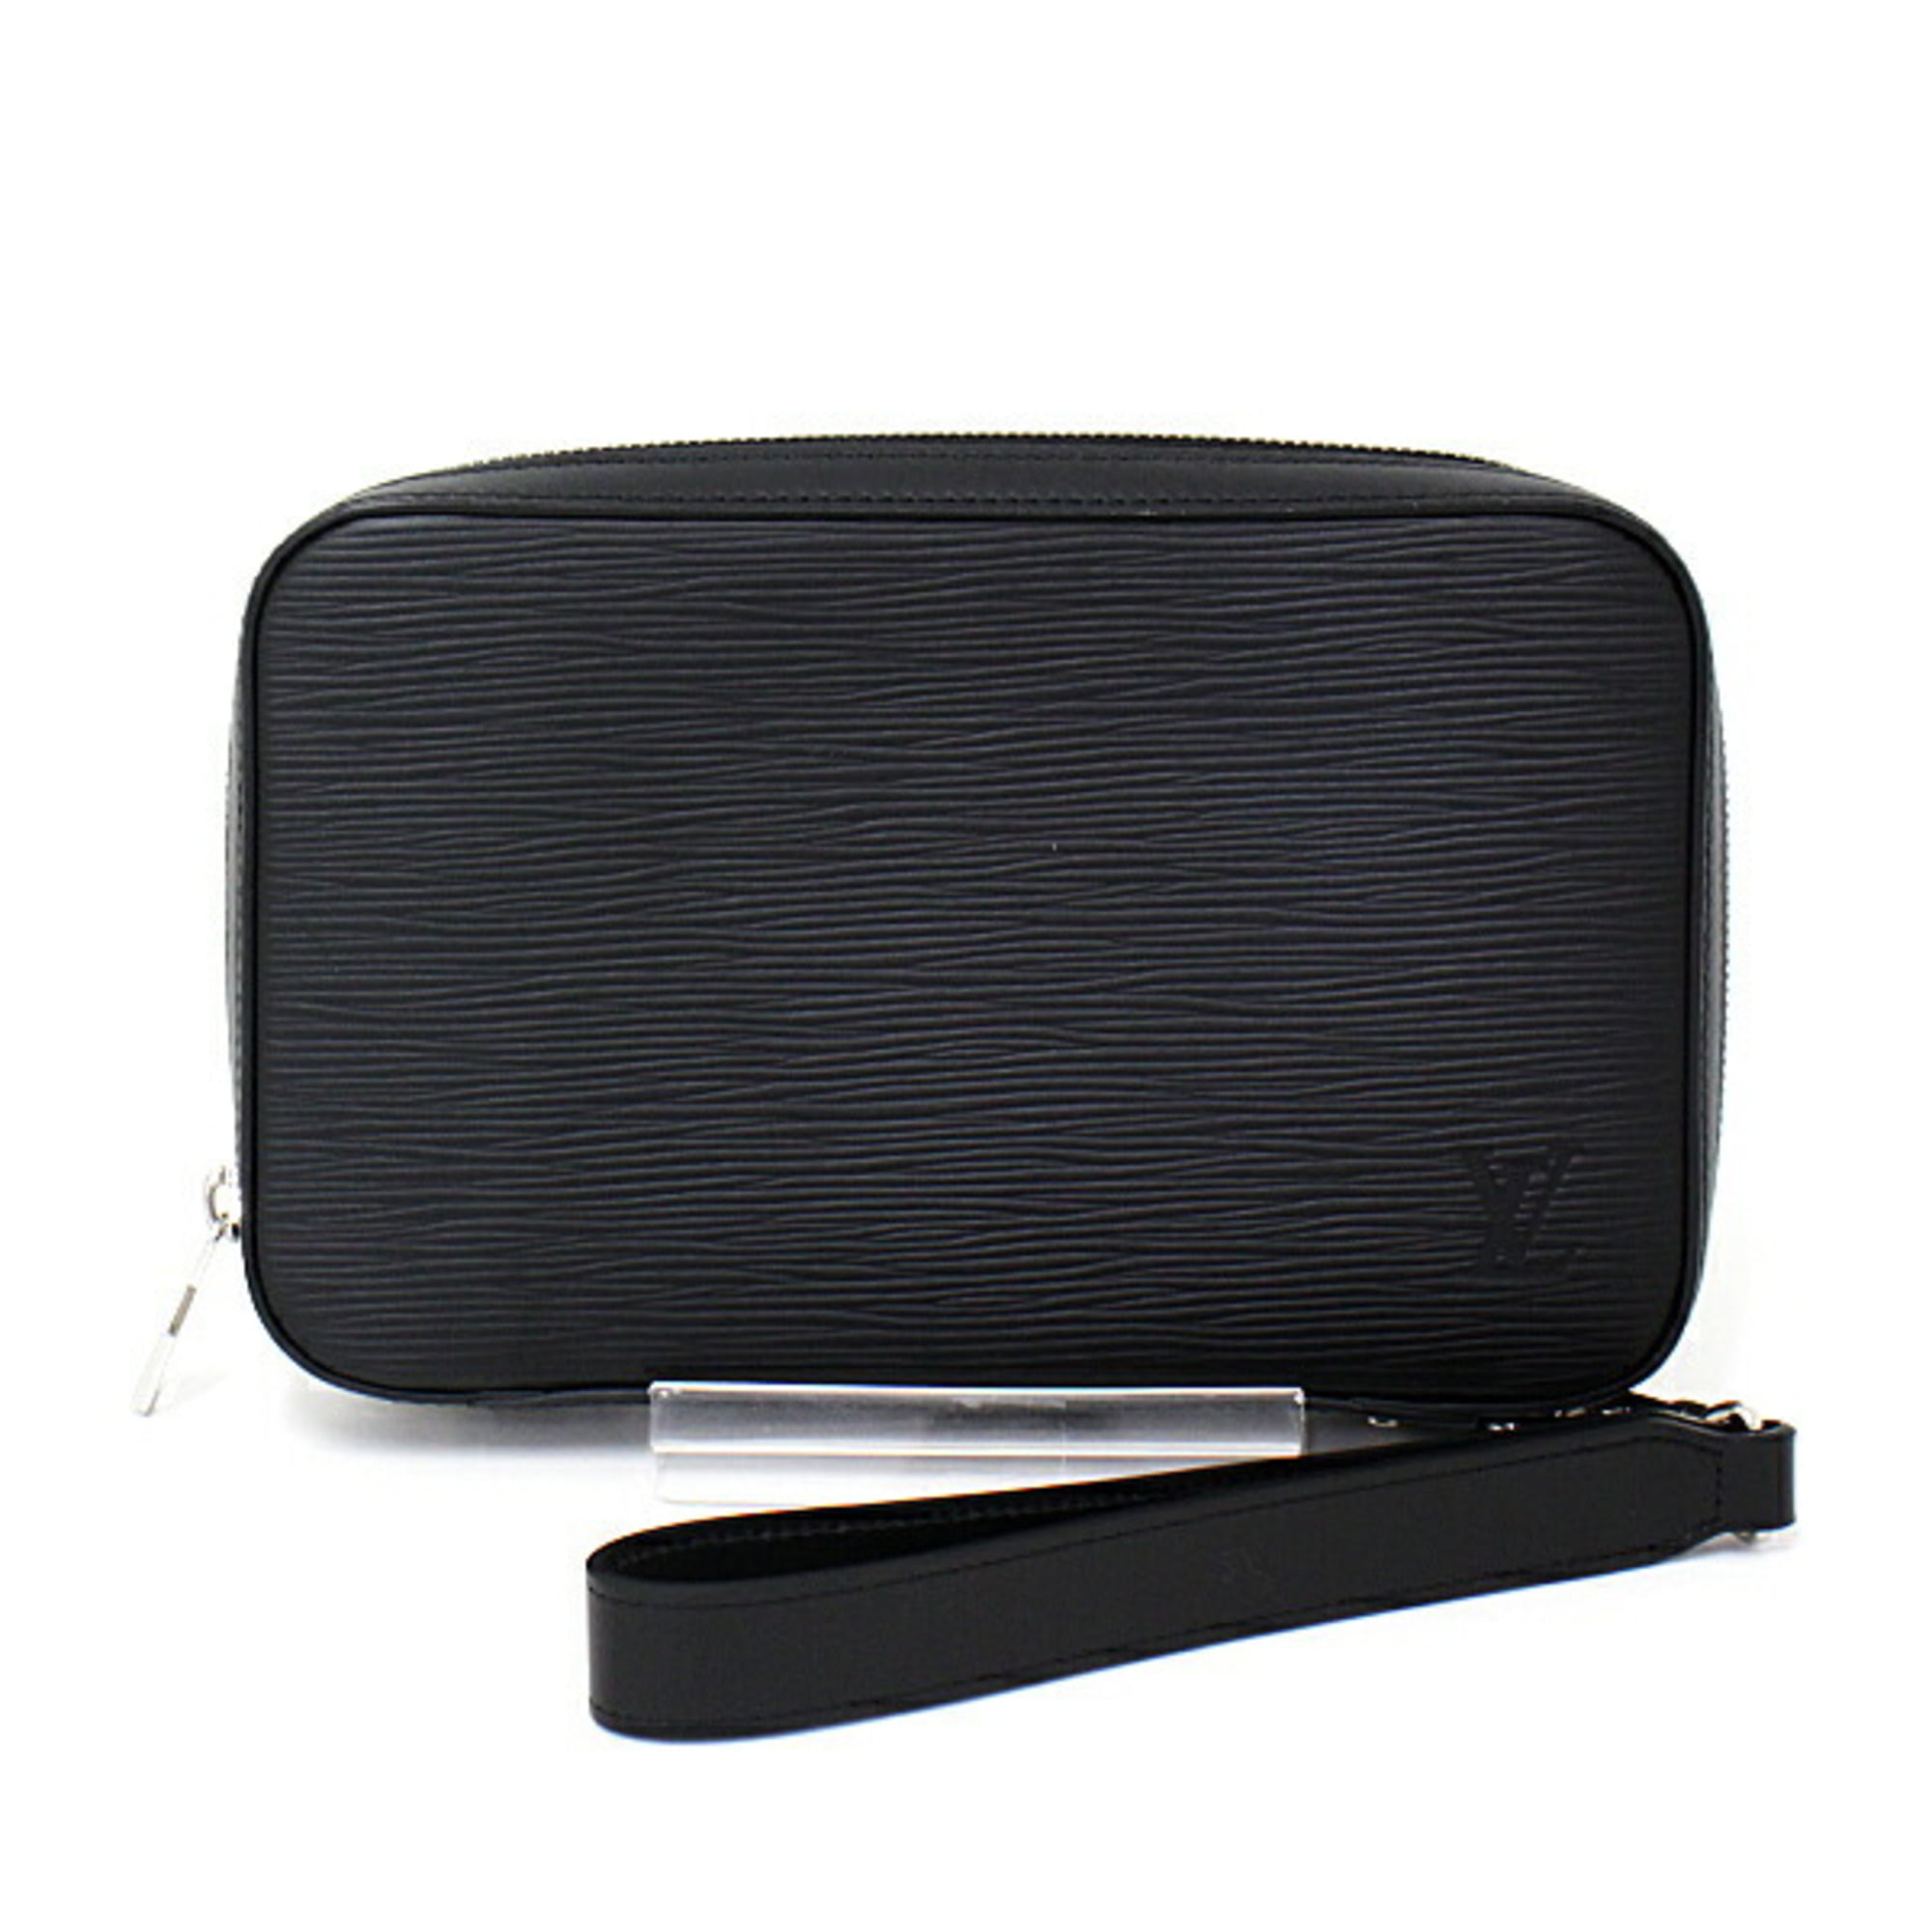 Authenticate for Luxury Designer Handbags - SHOP DANDY